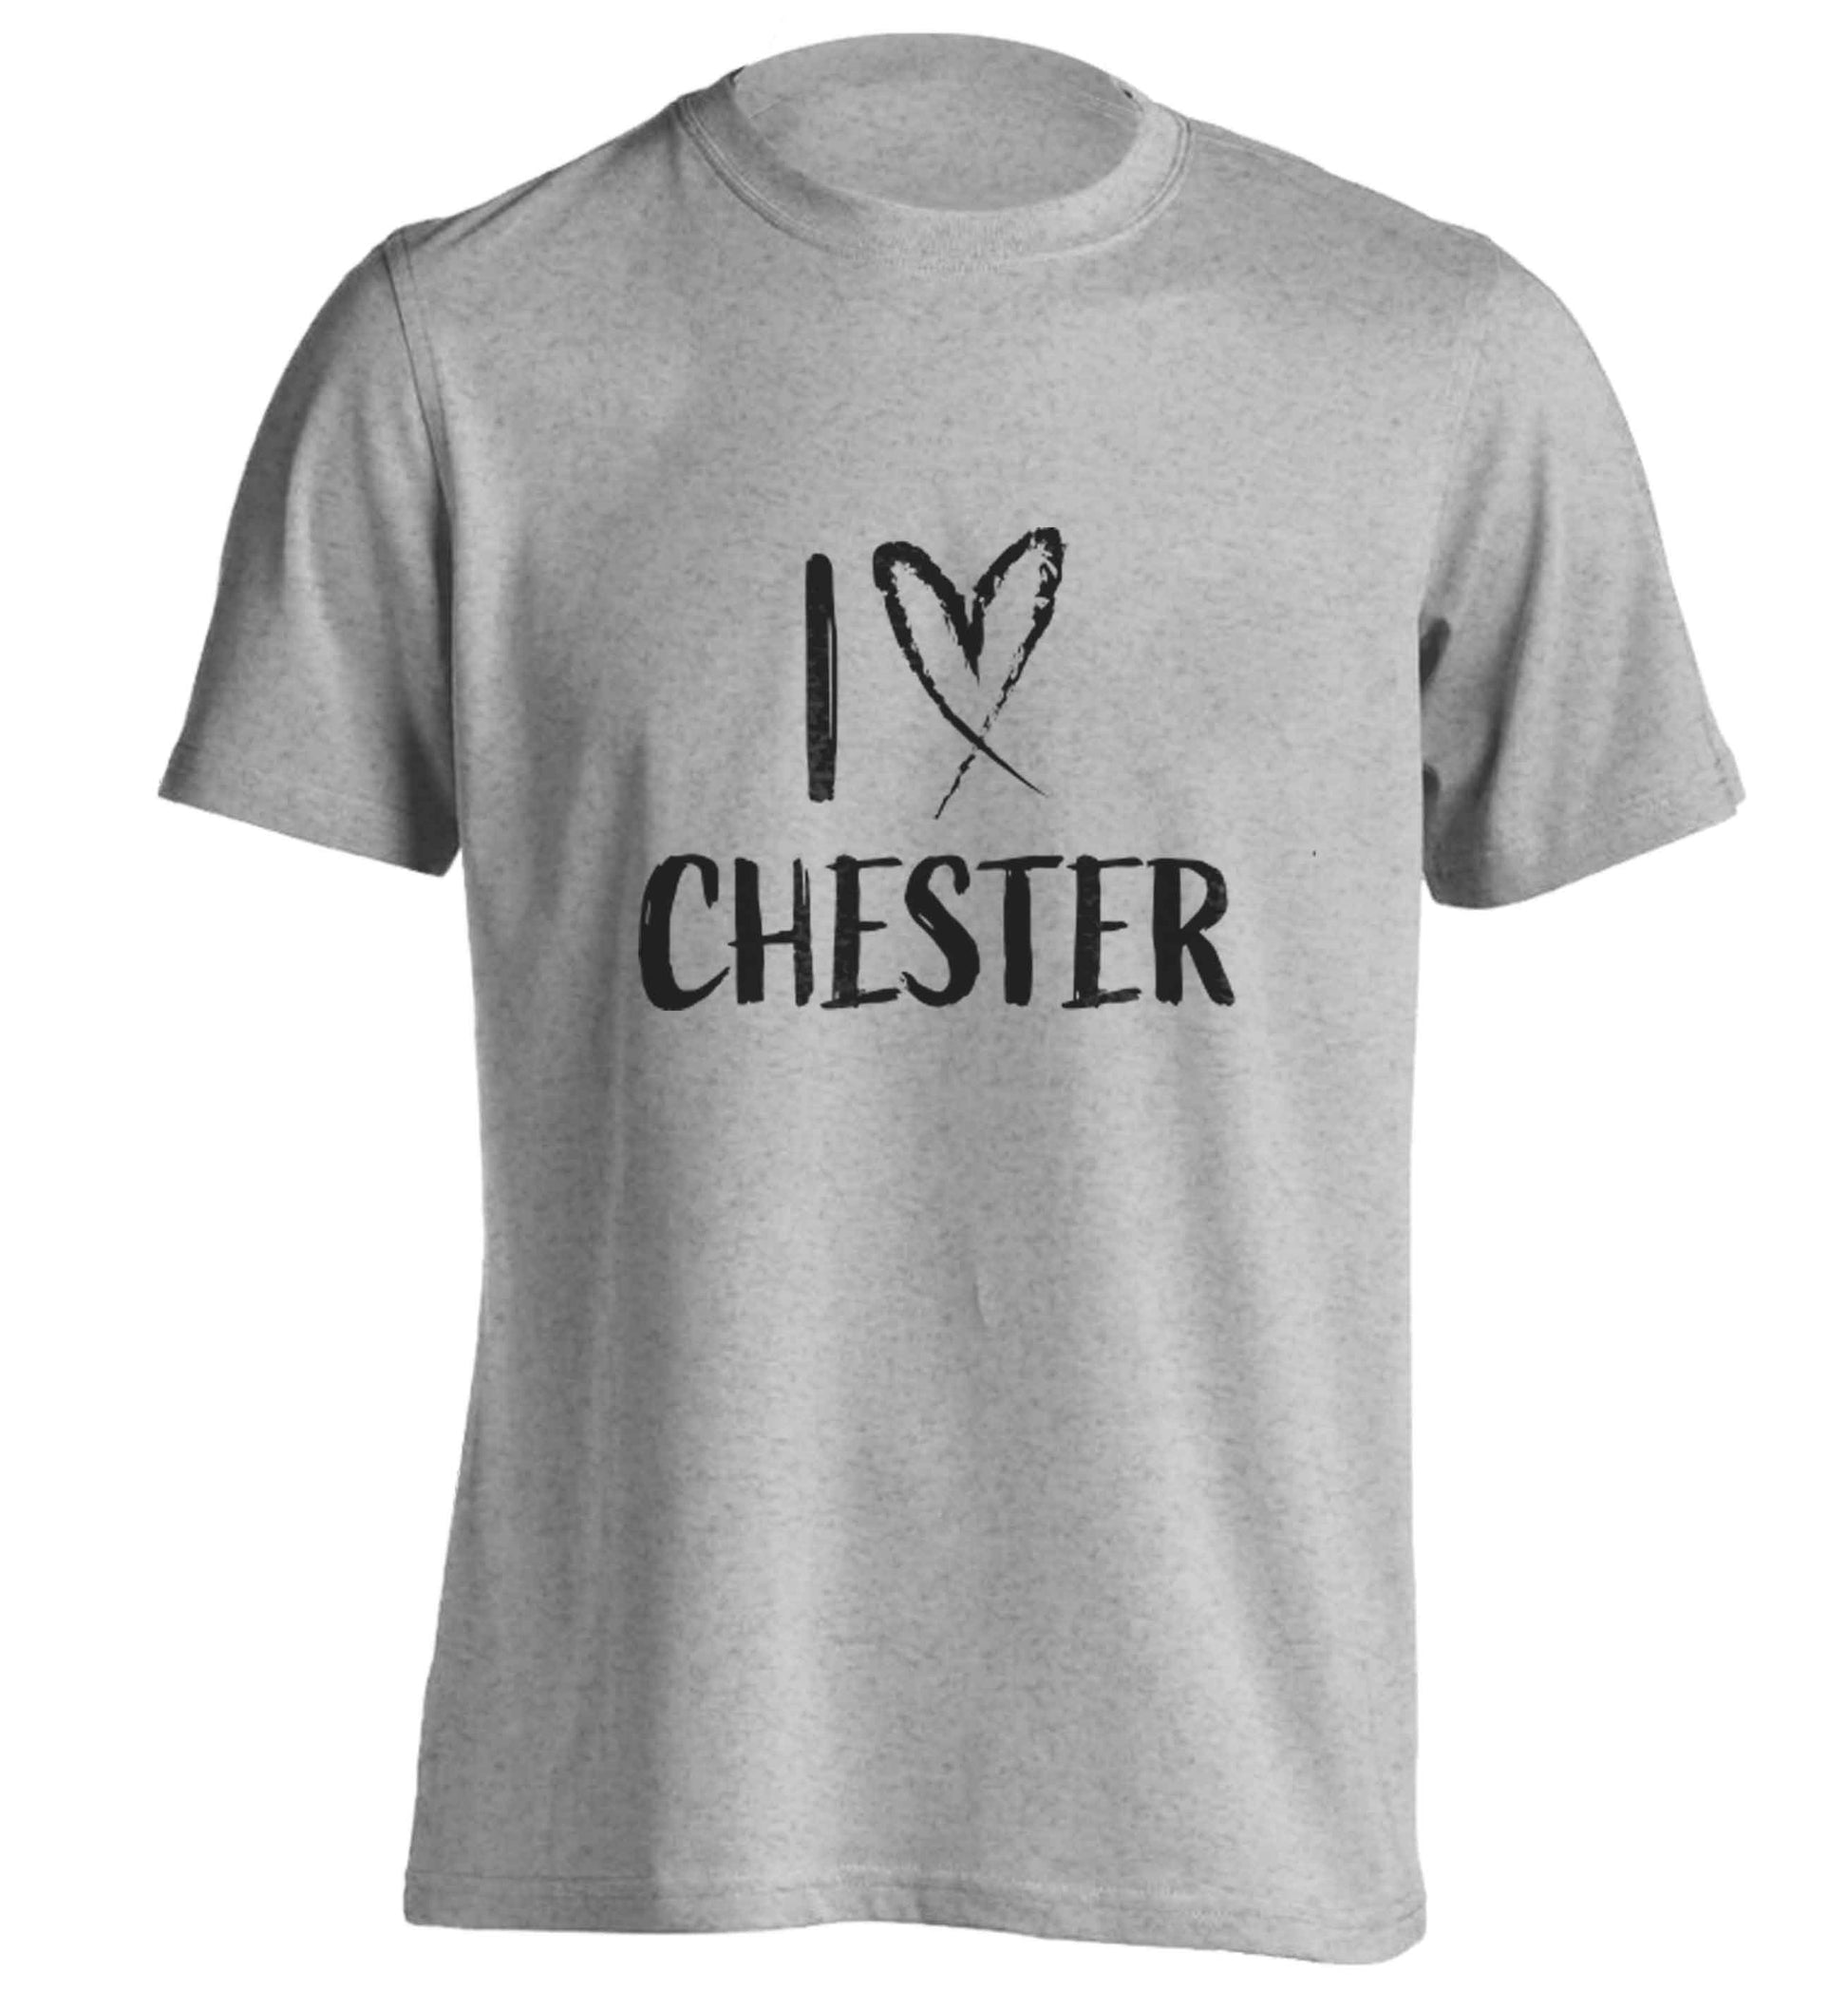 I love Chester adults unisex grey Tshirt 2XL